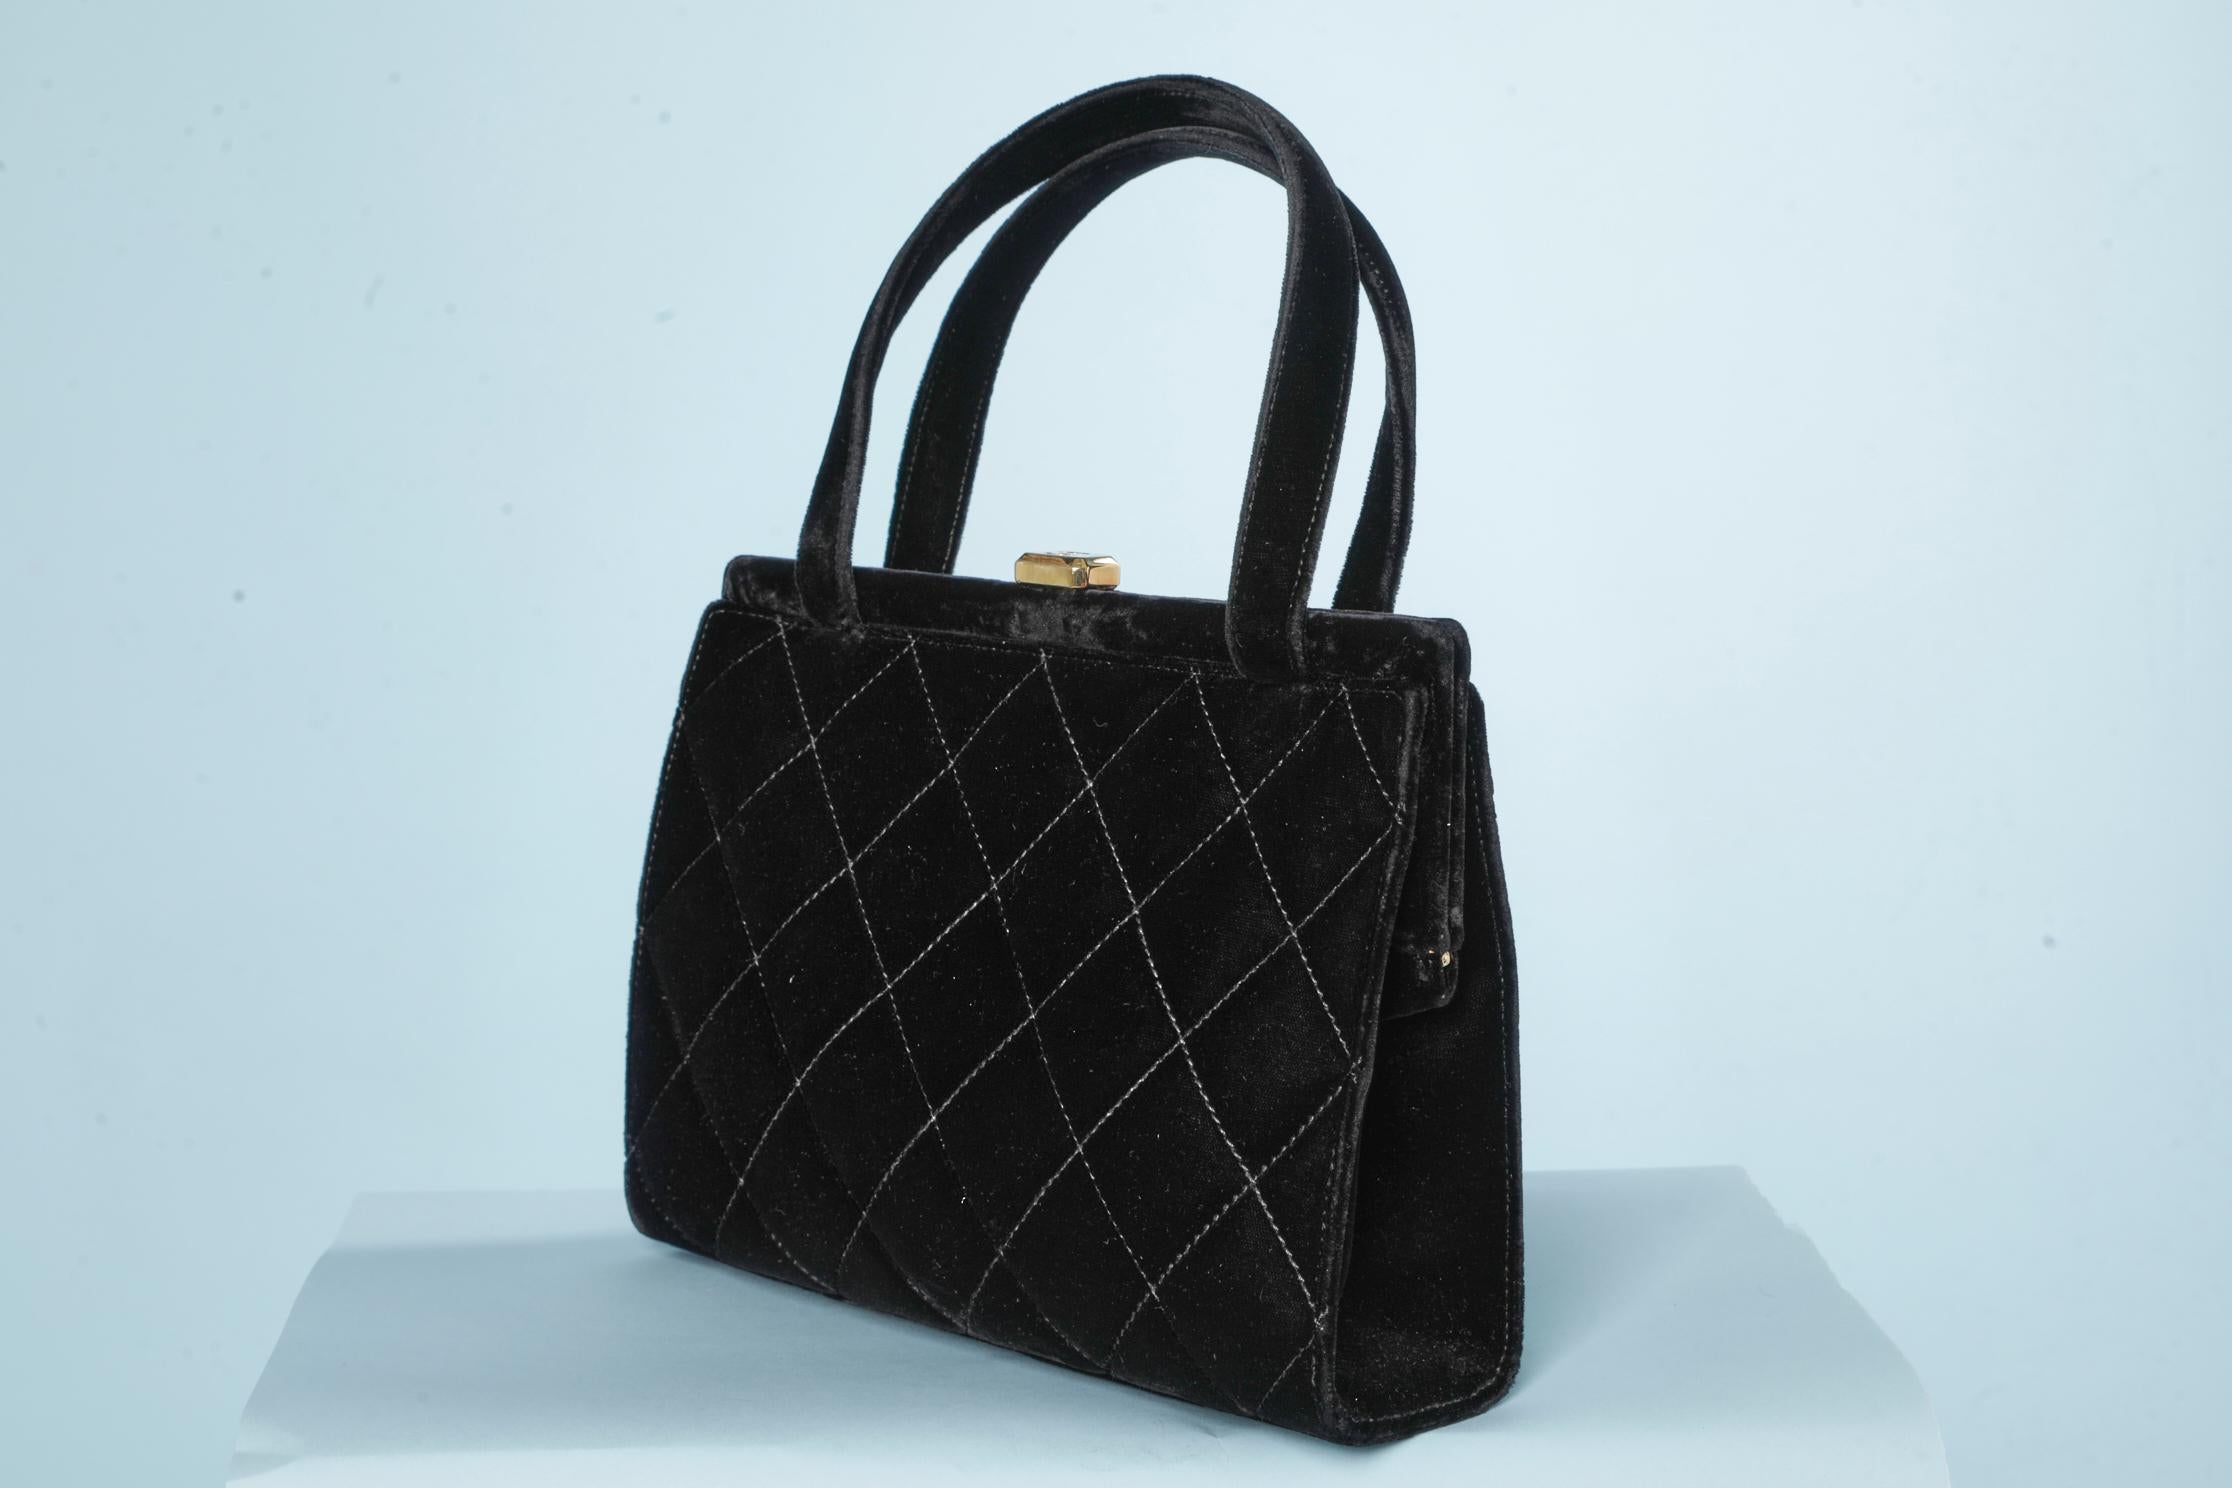 Haute-Couture black velvet Chanel bag 
Measures:
- width: 26 cm
- height: 21 cm
- depth: 5 cm